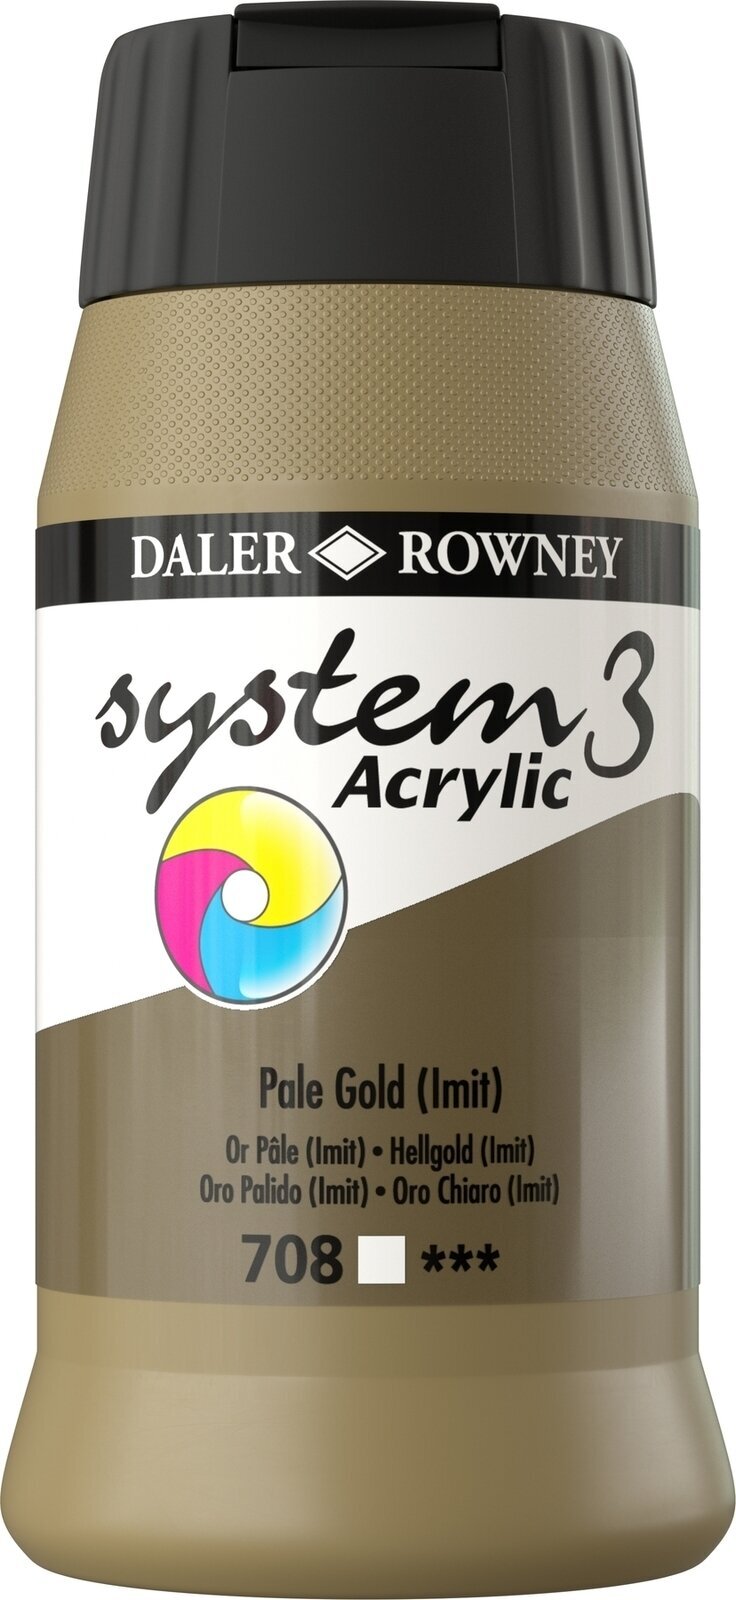 Acrylic Paint Daler Rowney System3 Acrylic Paint Pale Gold Imitation 500 ml 1 pc